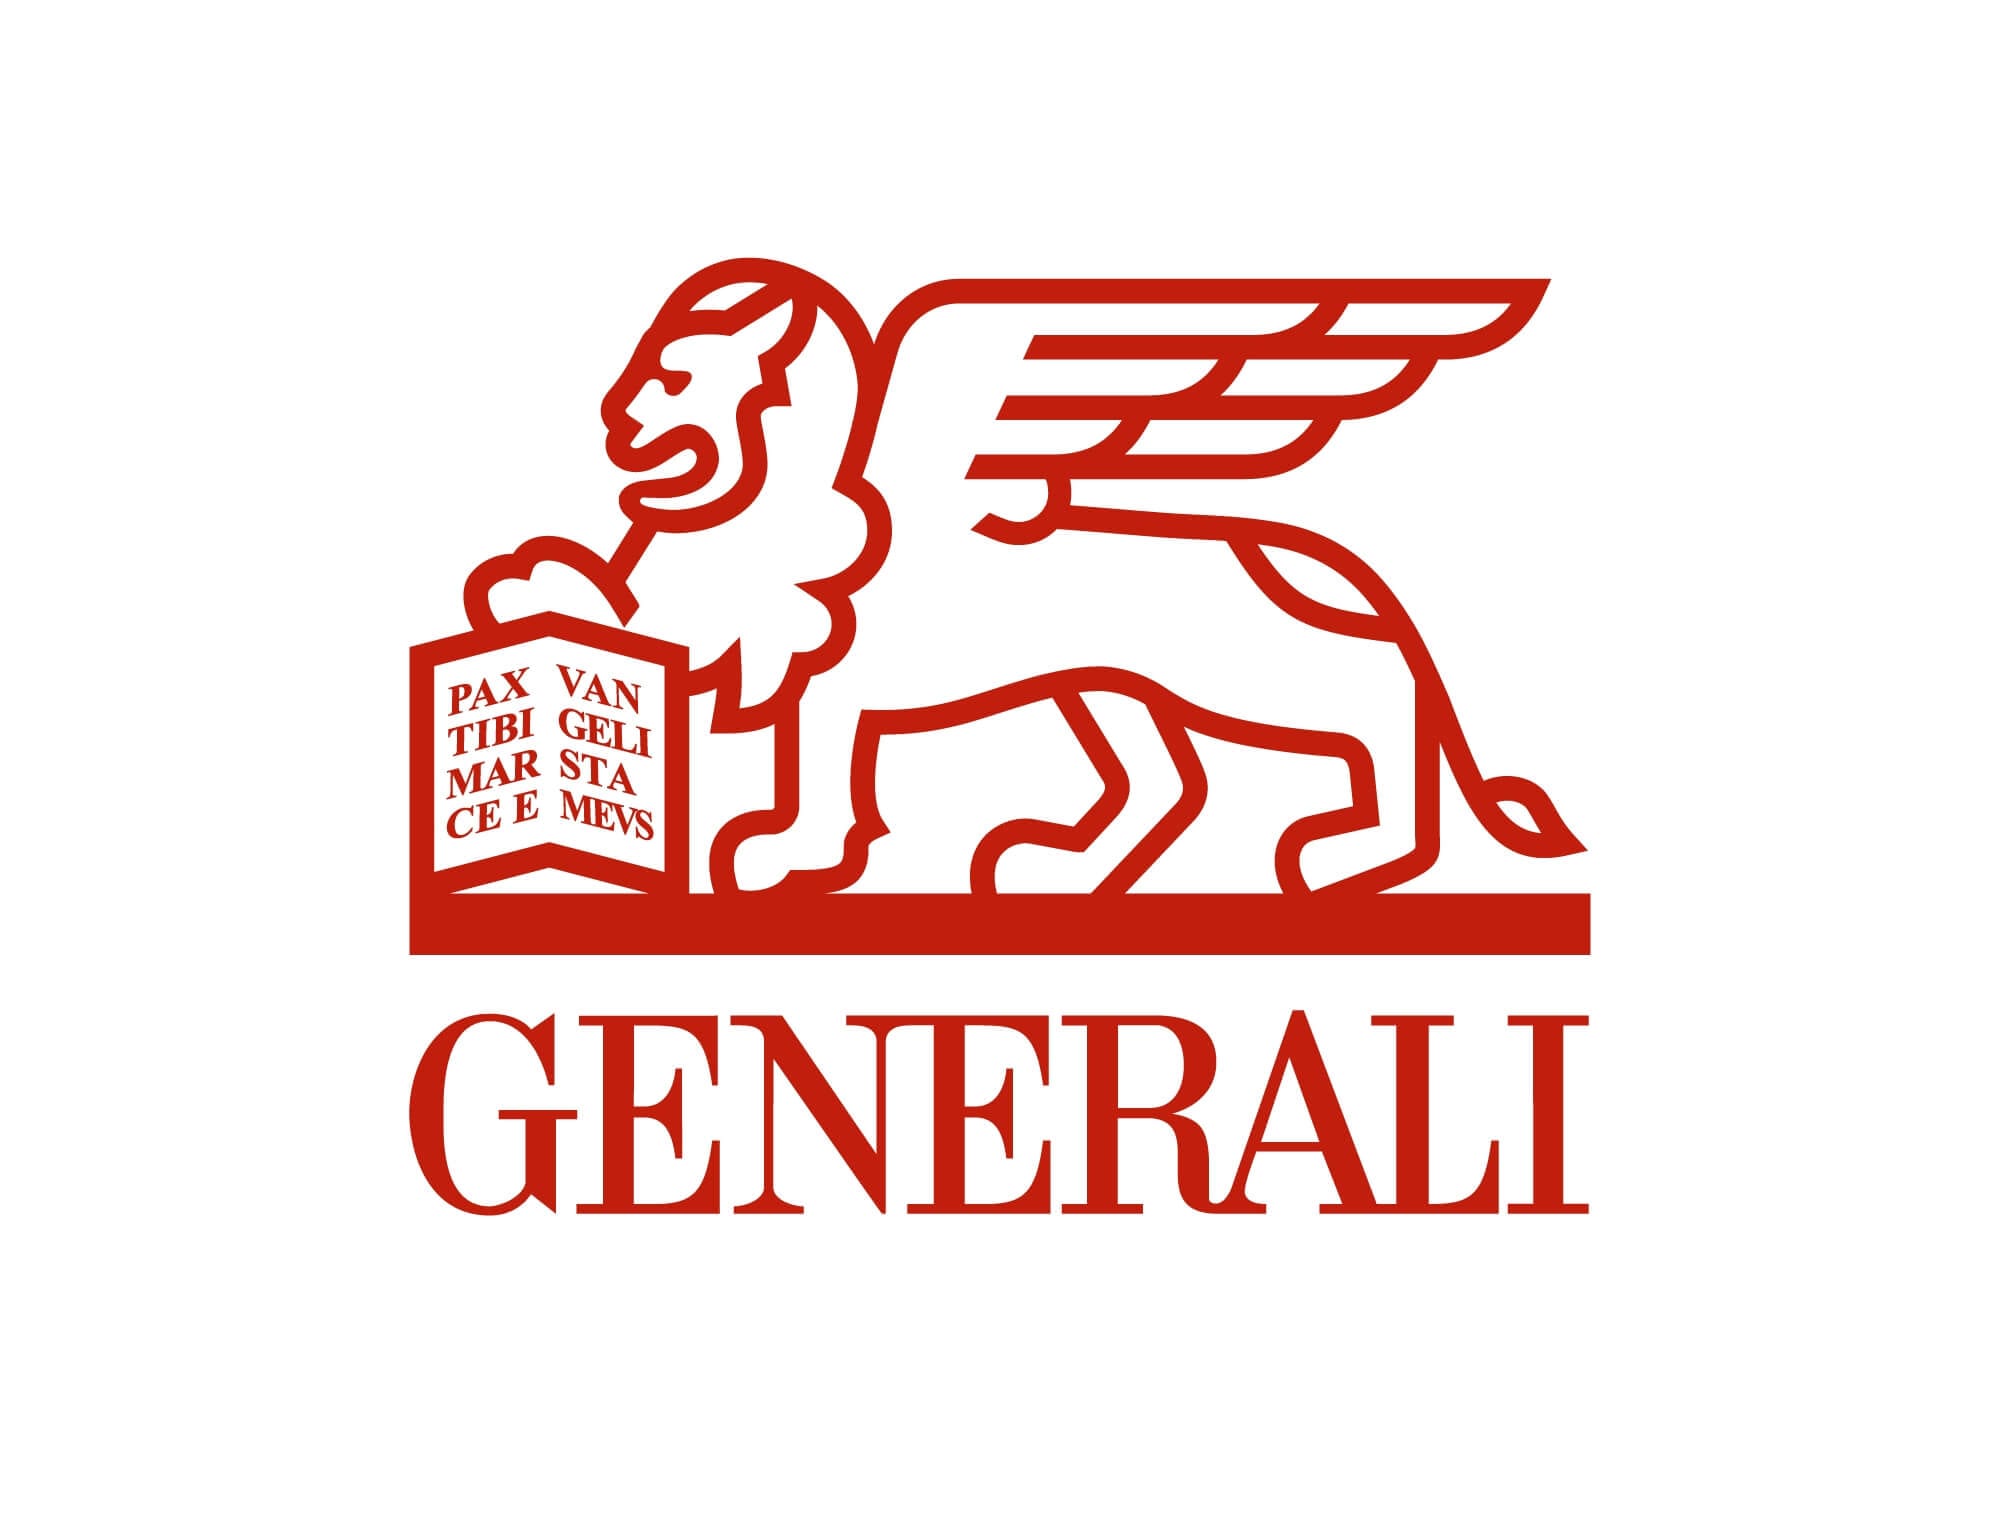 Assurance generali logo